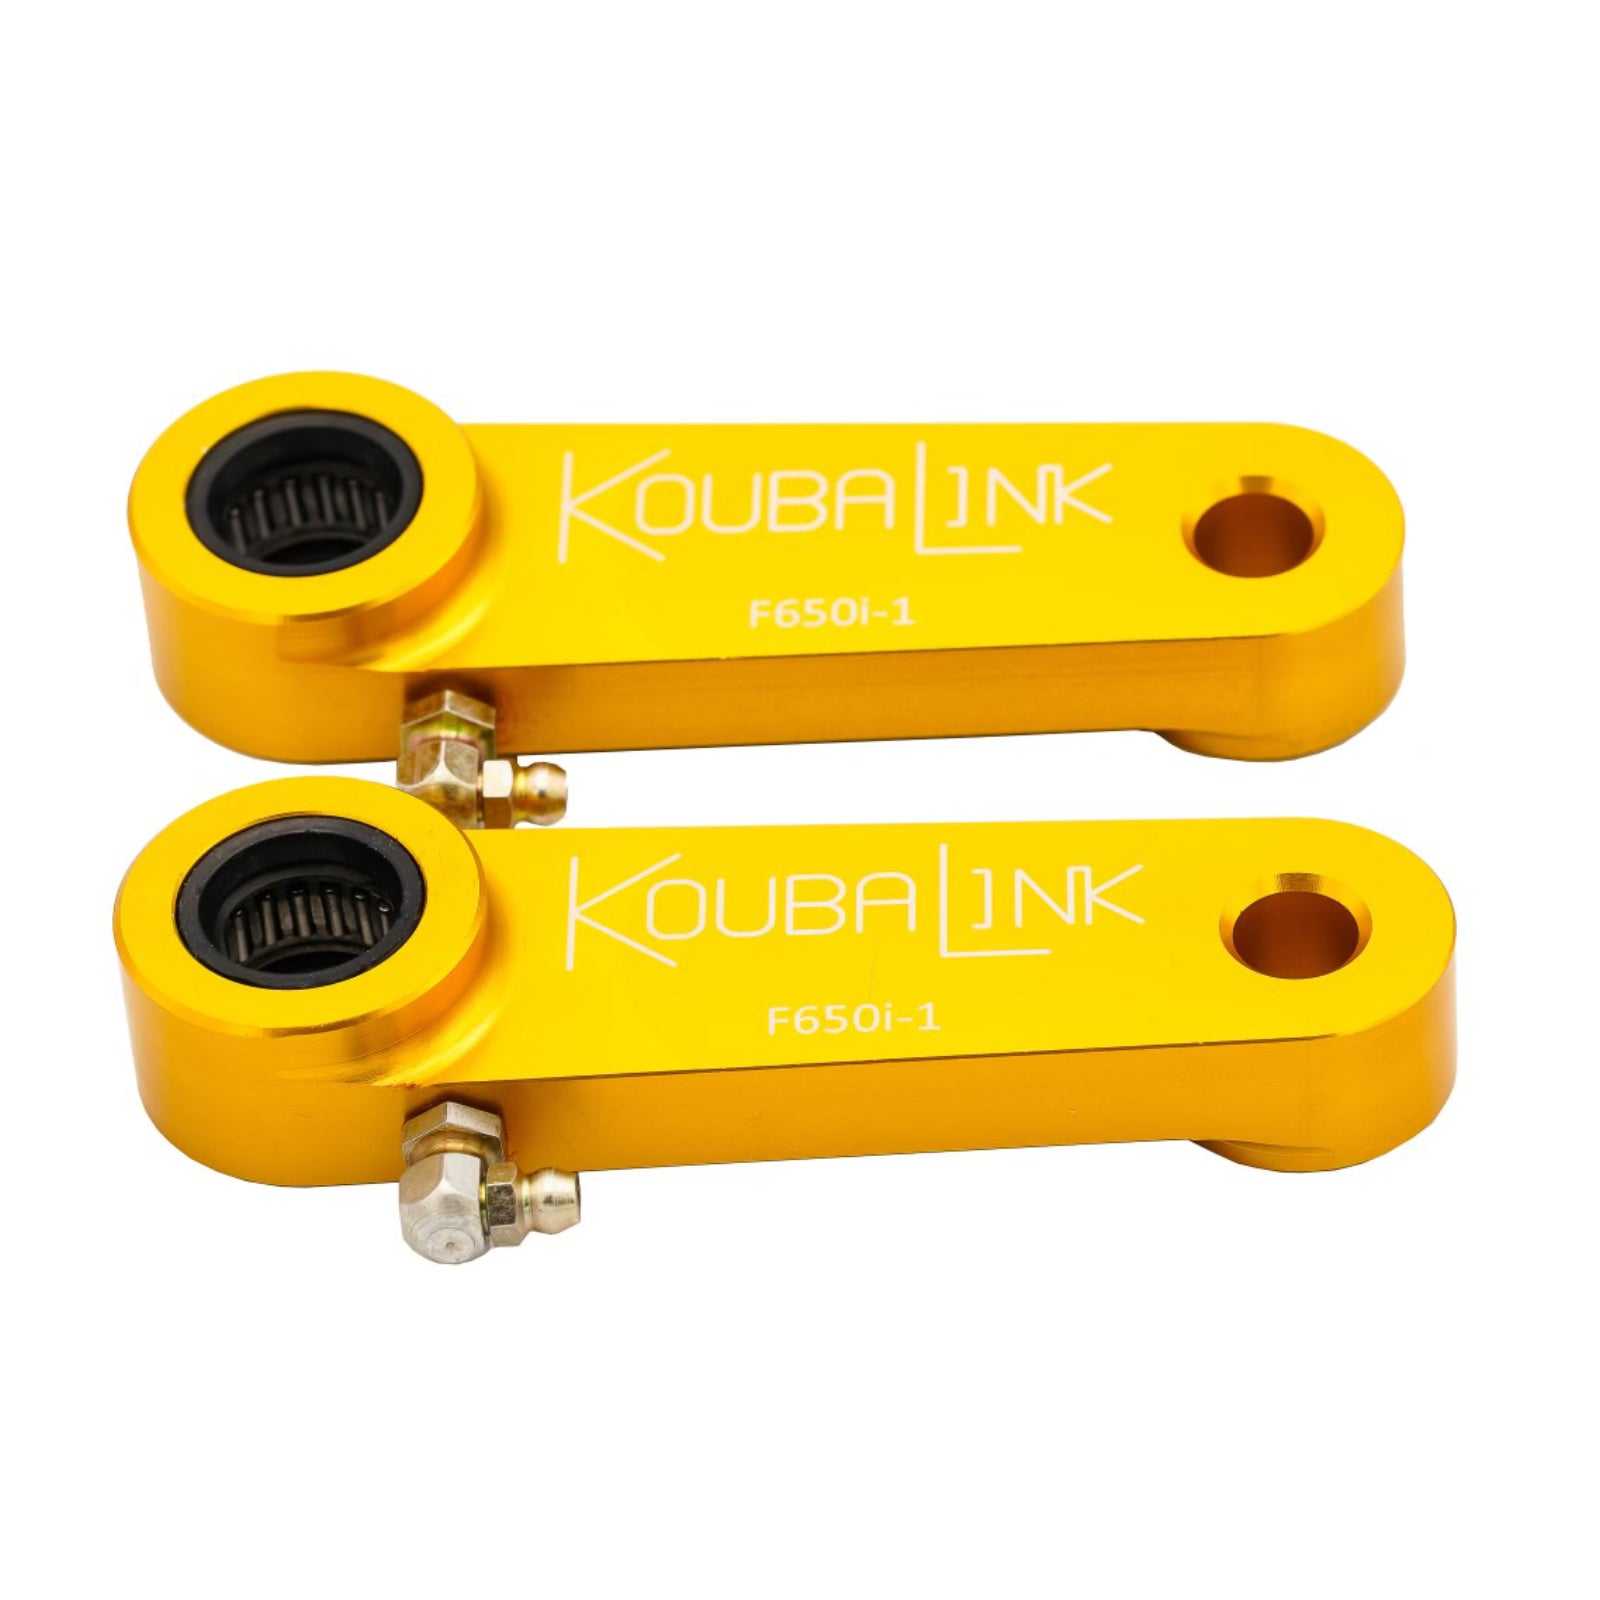 KoubaLink, Koubalink 25 mm Tieferlegungsgestänge F650I-1 – Gold